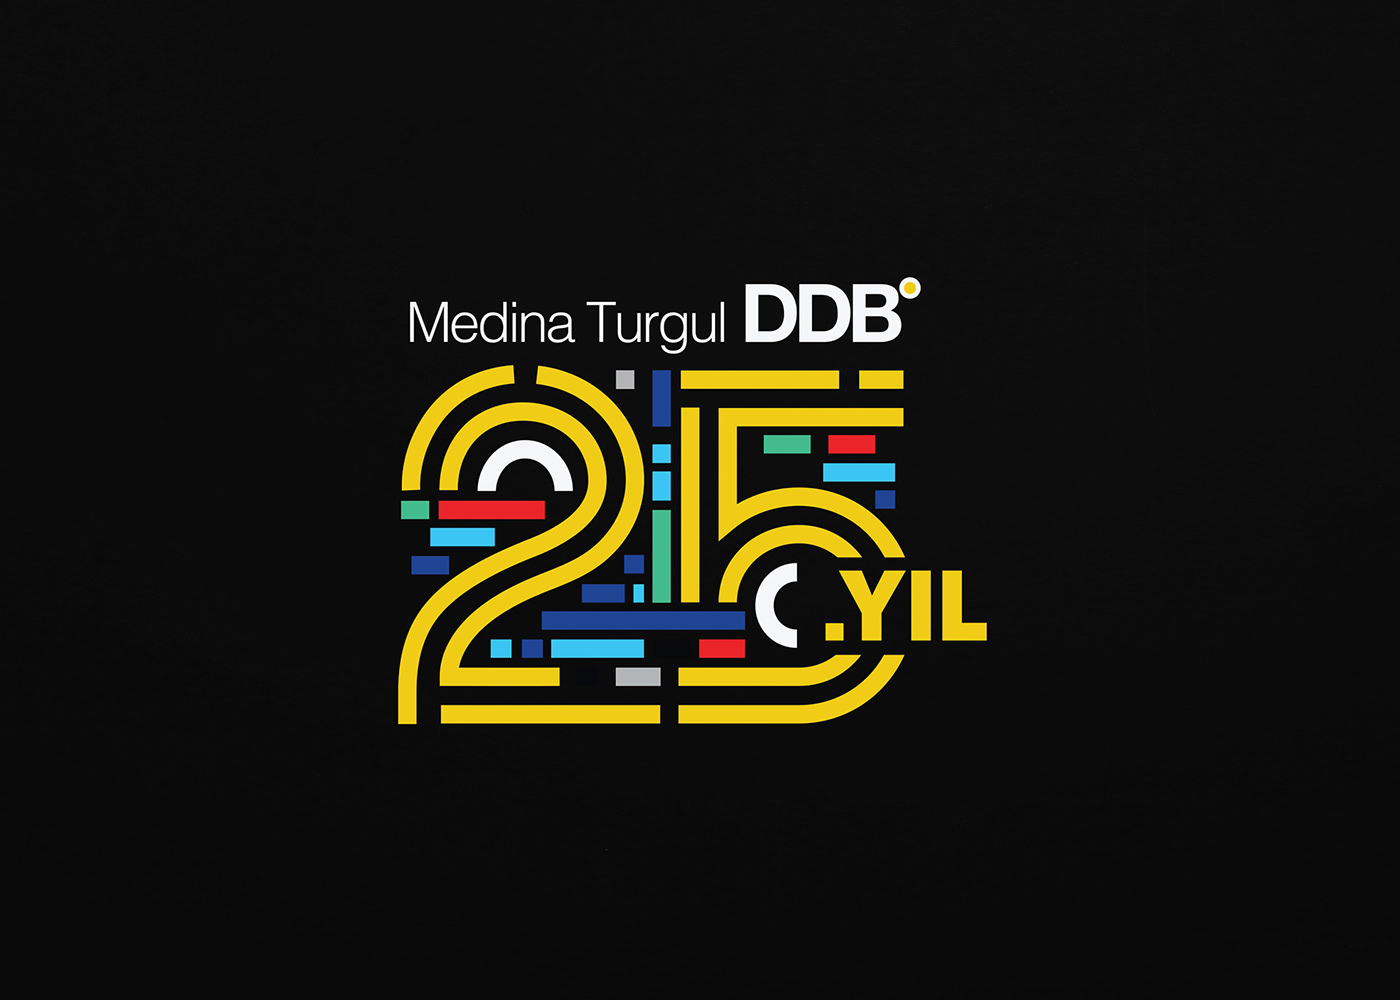 Medina Turgul DDB 25周年纪念logo和品牌识别设计